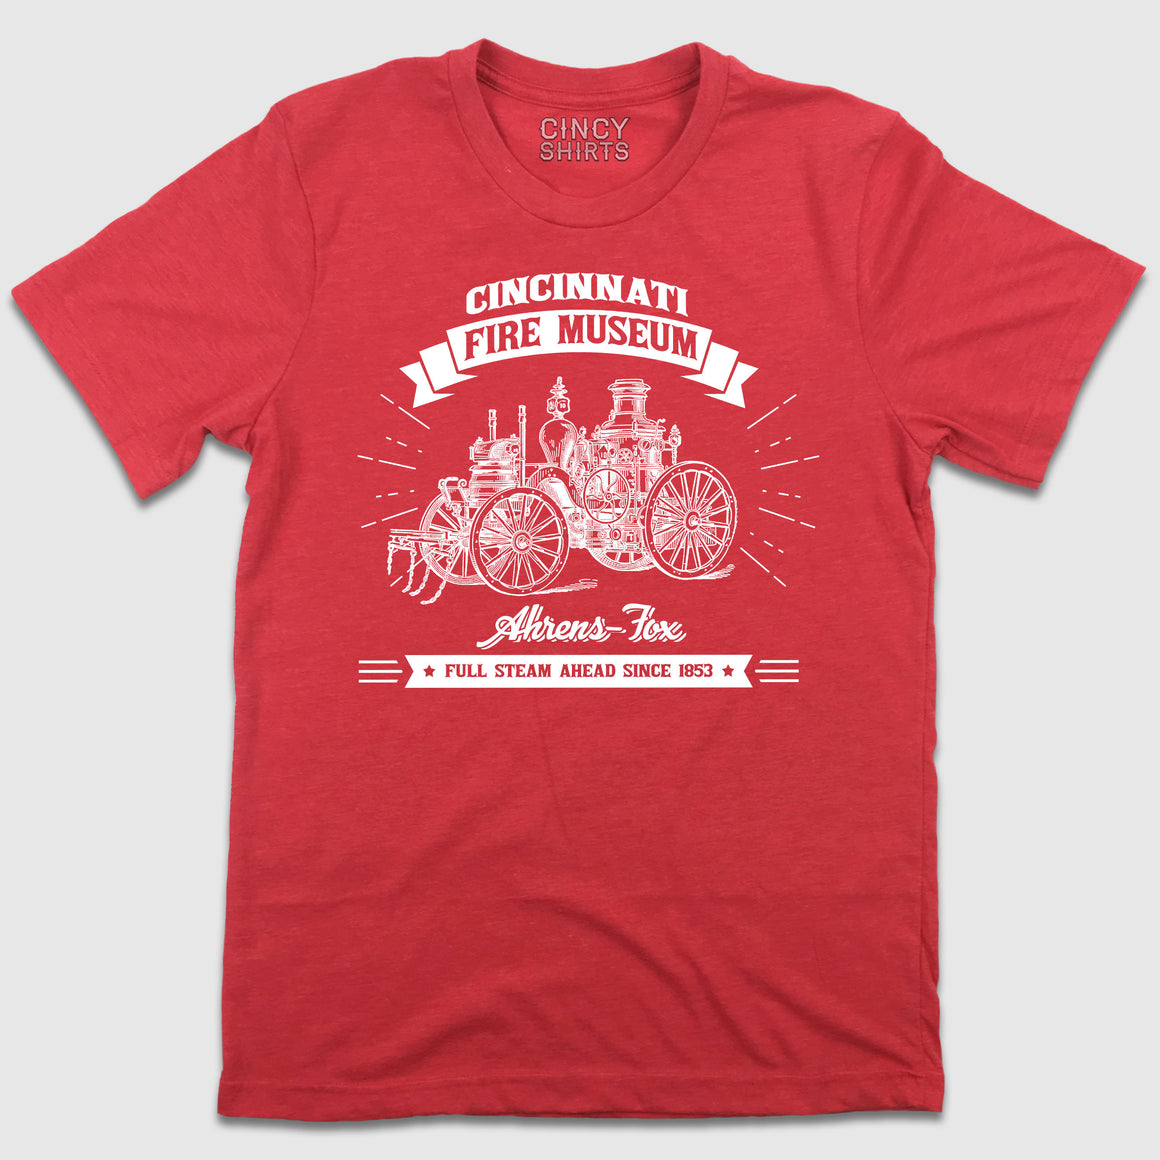 Cincinnati Fire Museum - Cincy Shirts